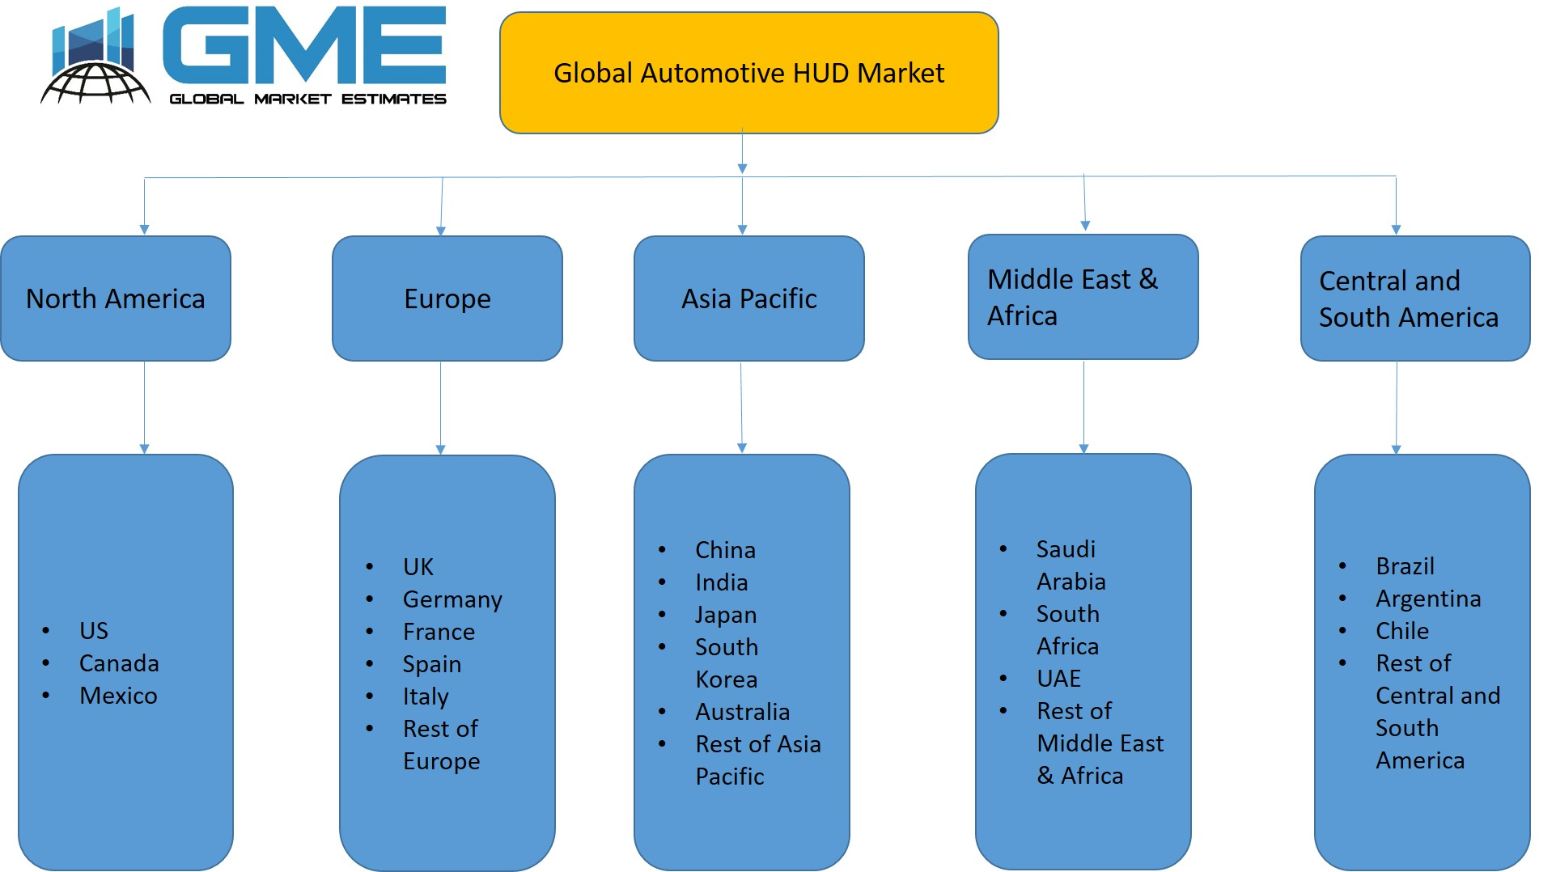 Automotive HUD Market - Regional Analysis